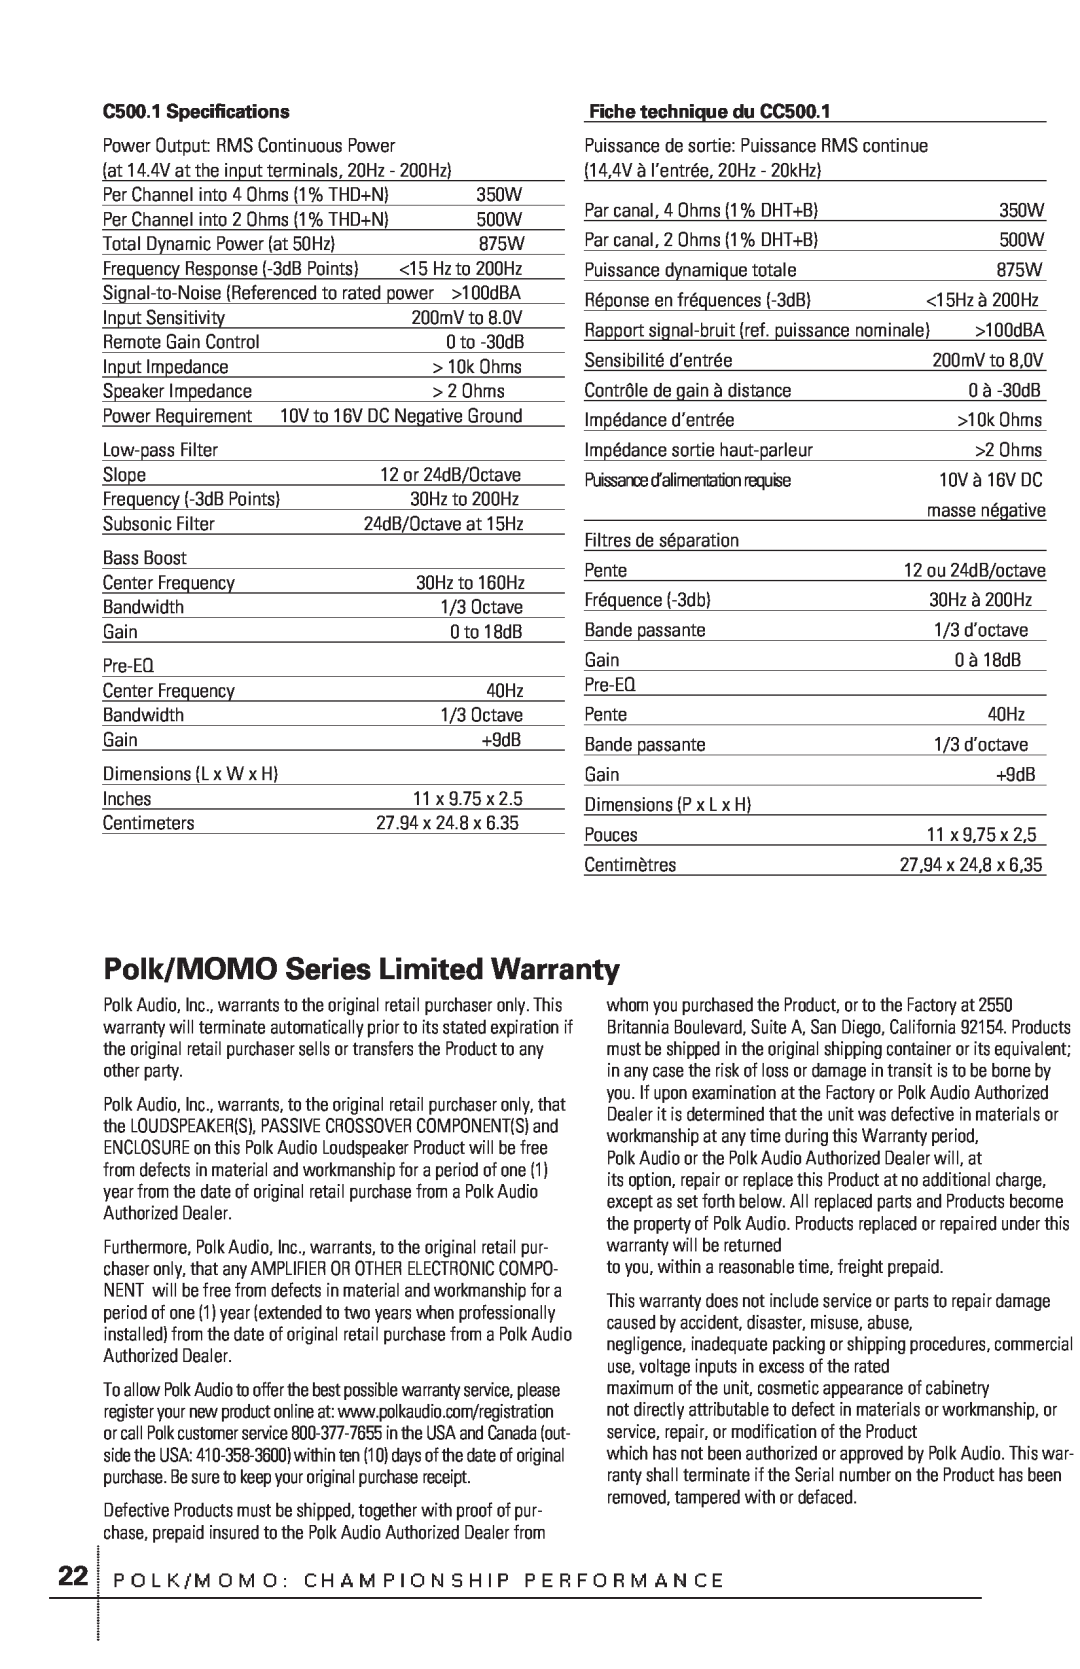 Polk Audio owner manual Polk/MOMO Series Limited Warranty, C500.1 Specifications, Fiche technique du CC500.1 